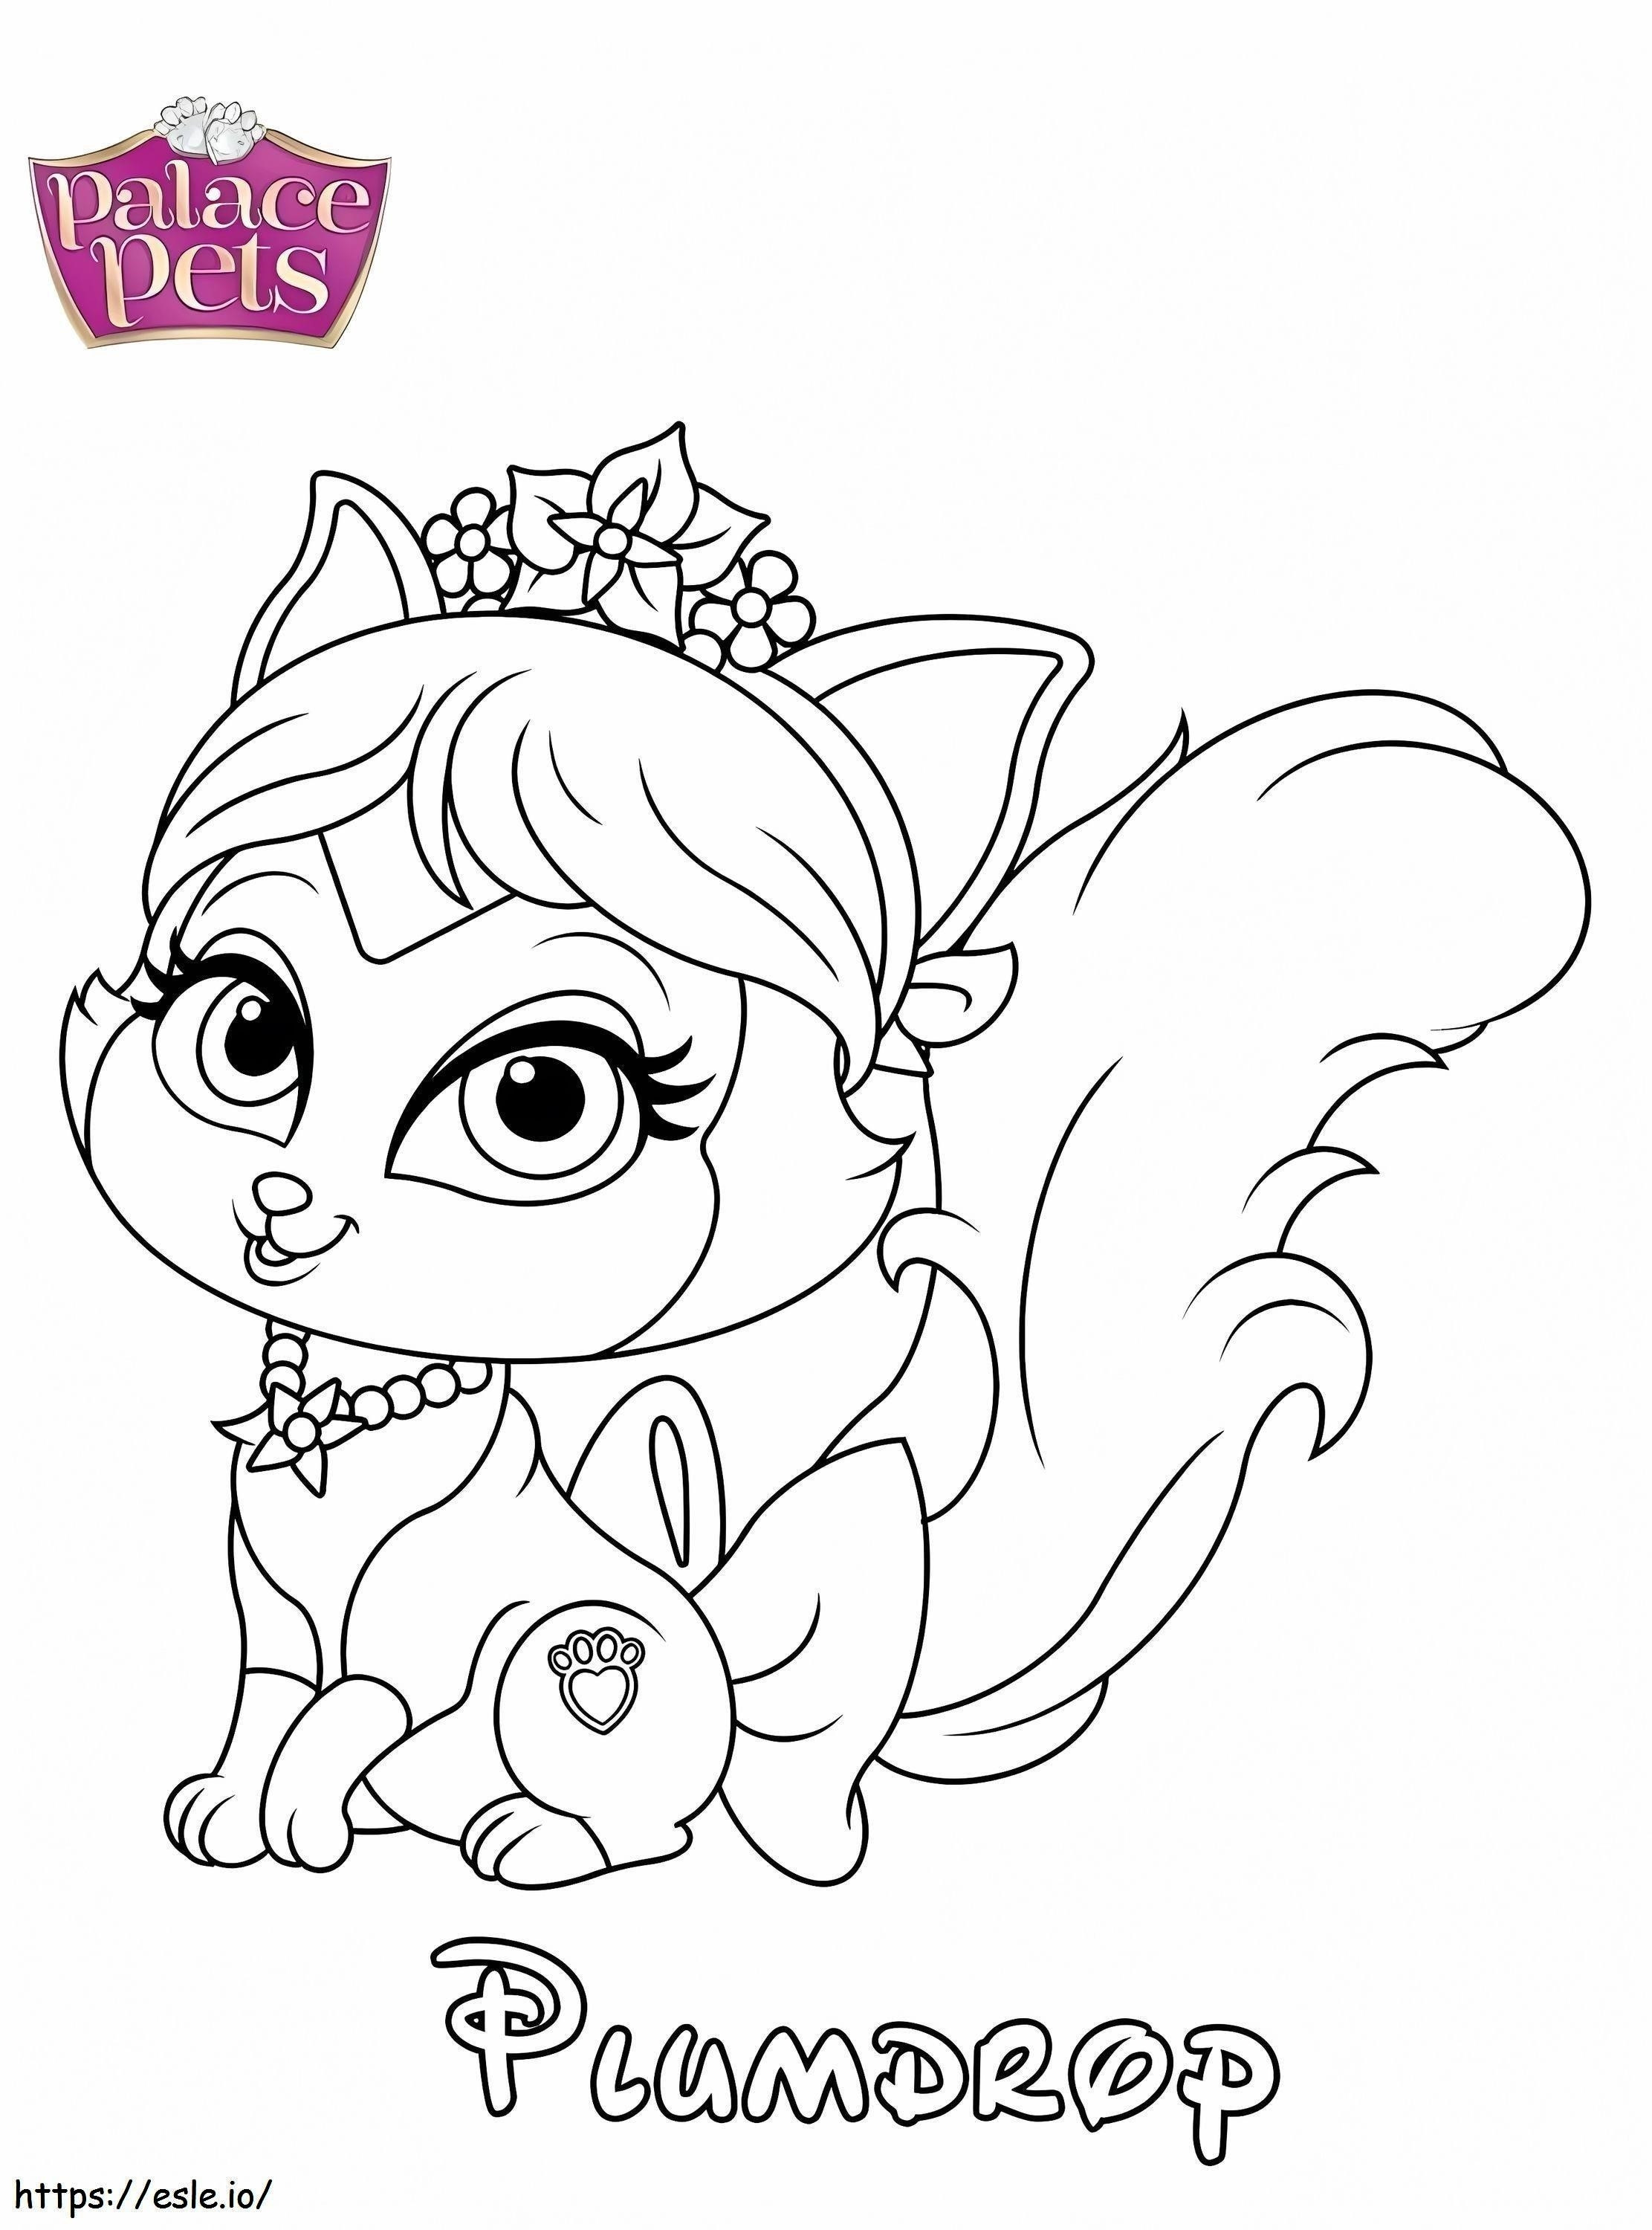 1586771249 Plumdrop Princess coloring page